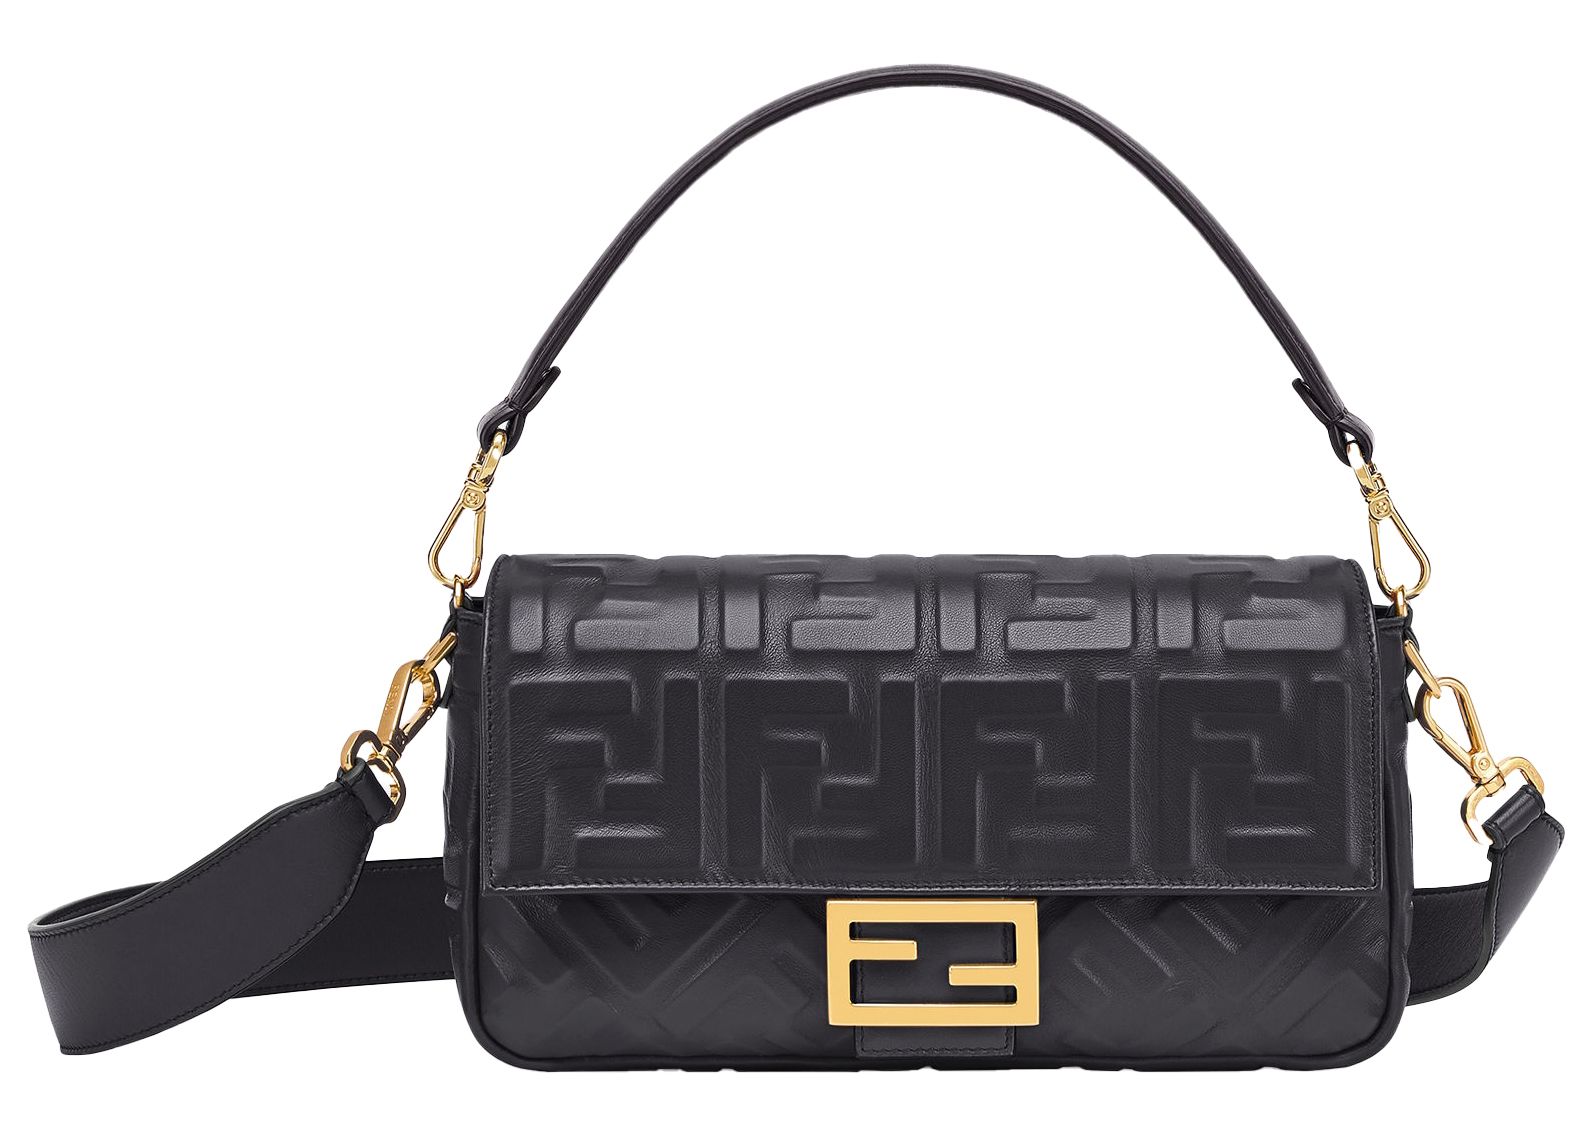 Fendi by Marc Jacobs Baguette Black Leather Bag | StockX